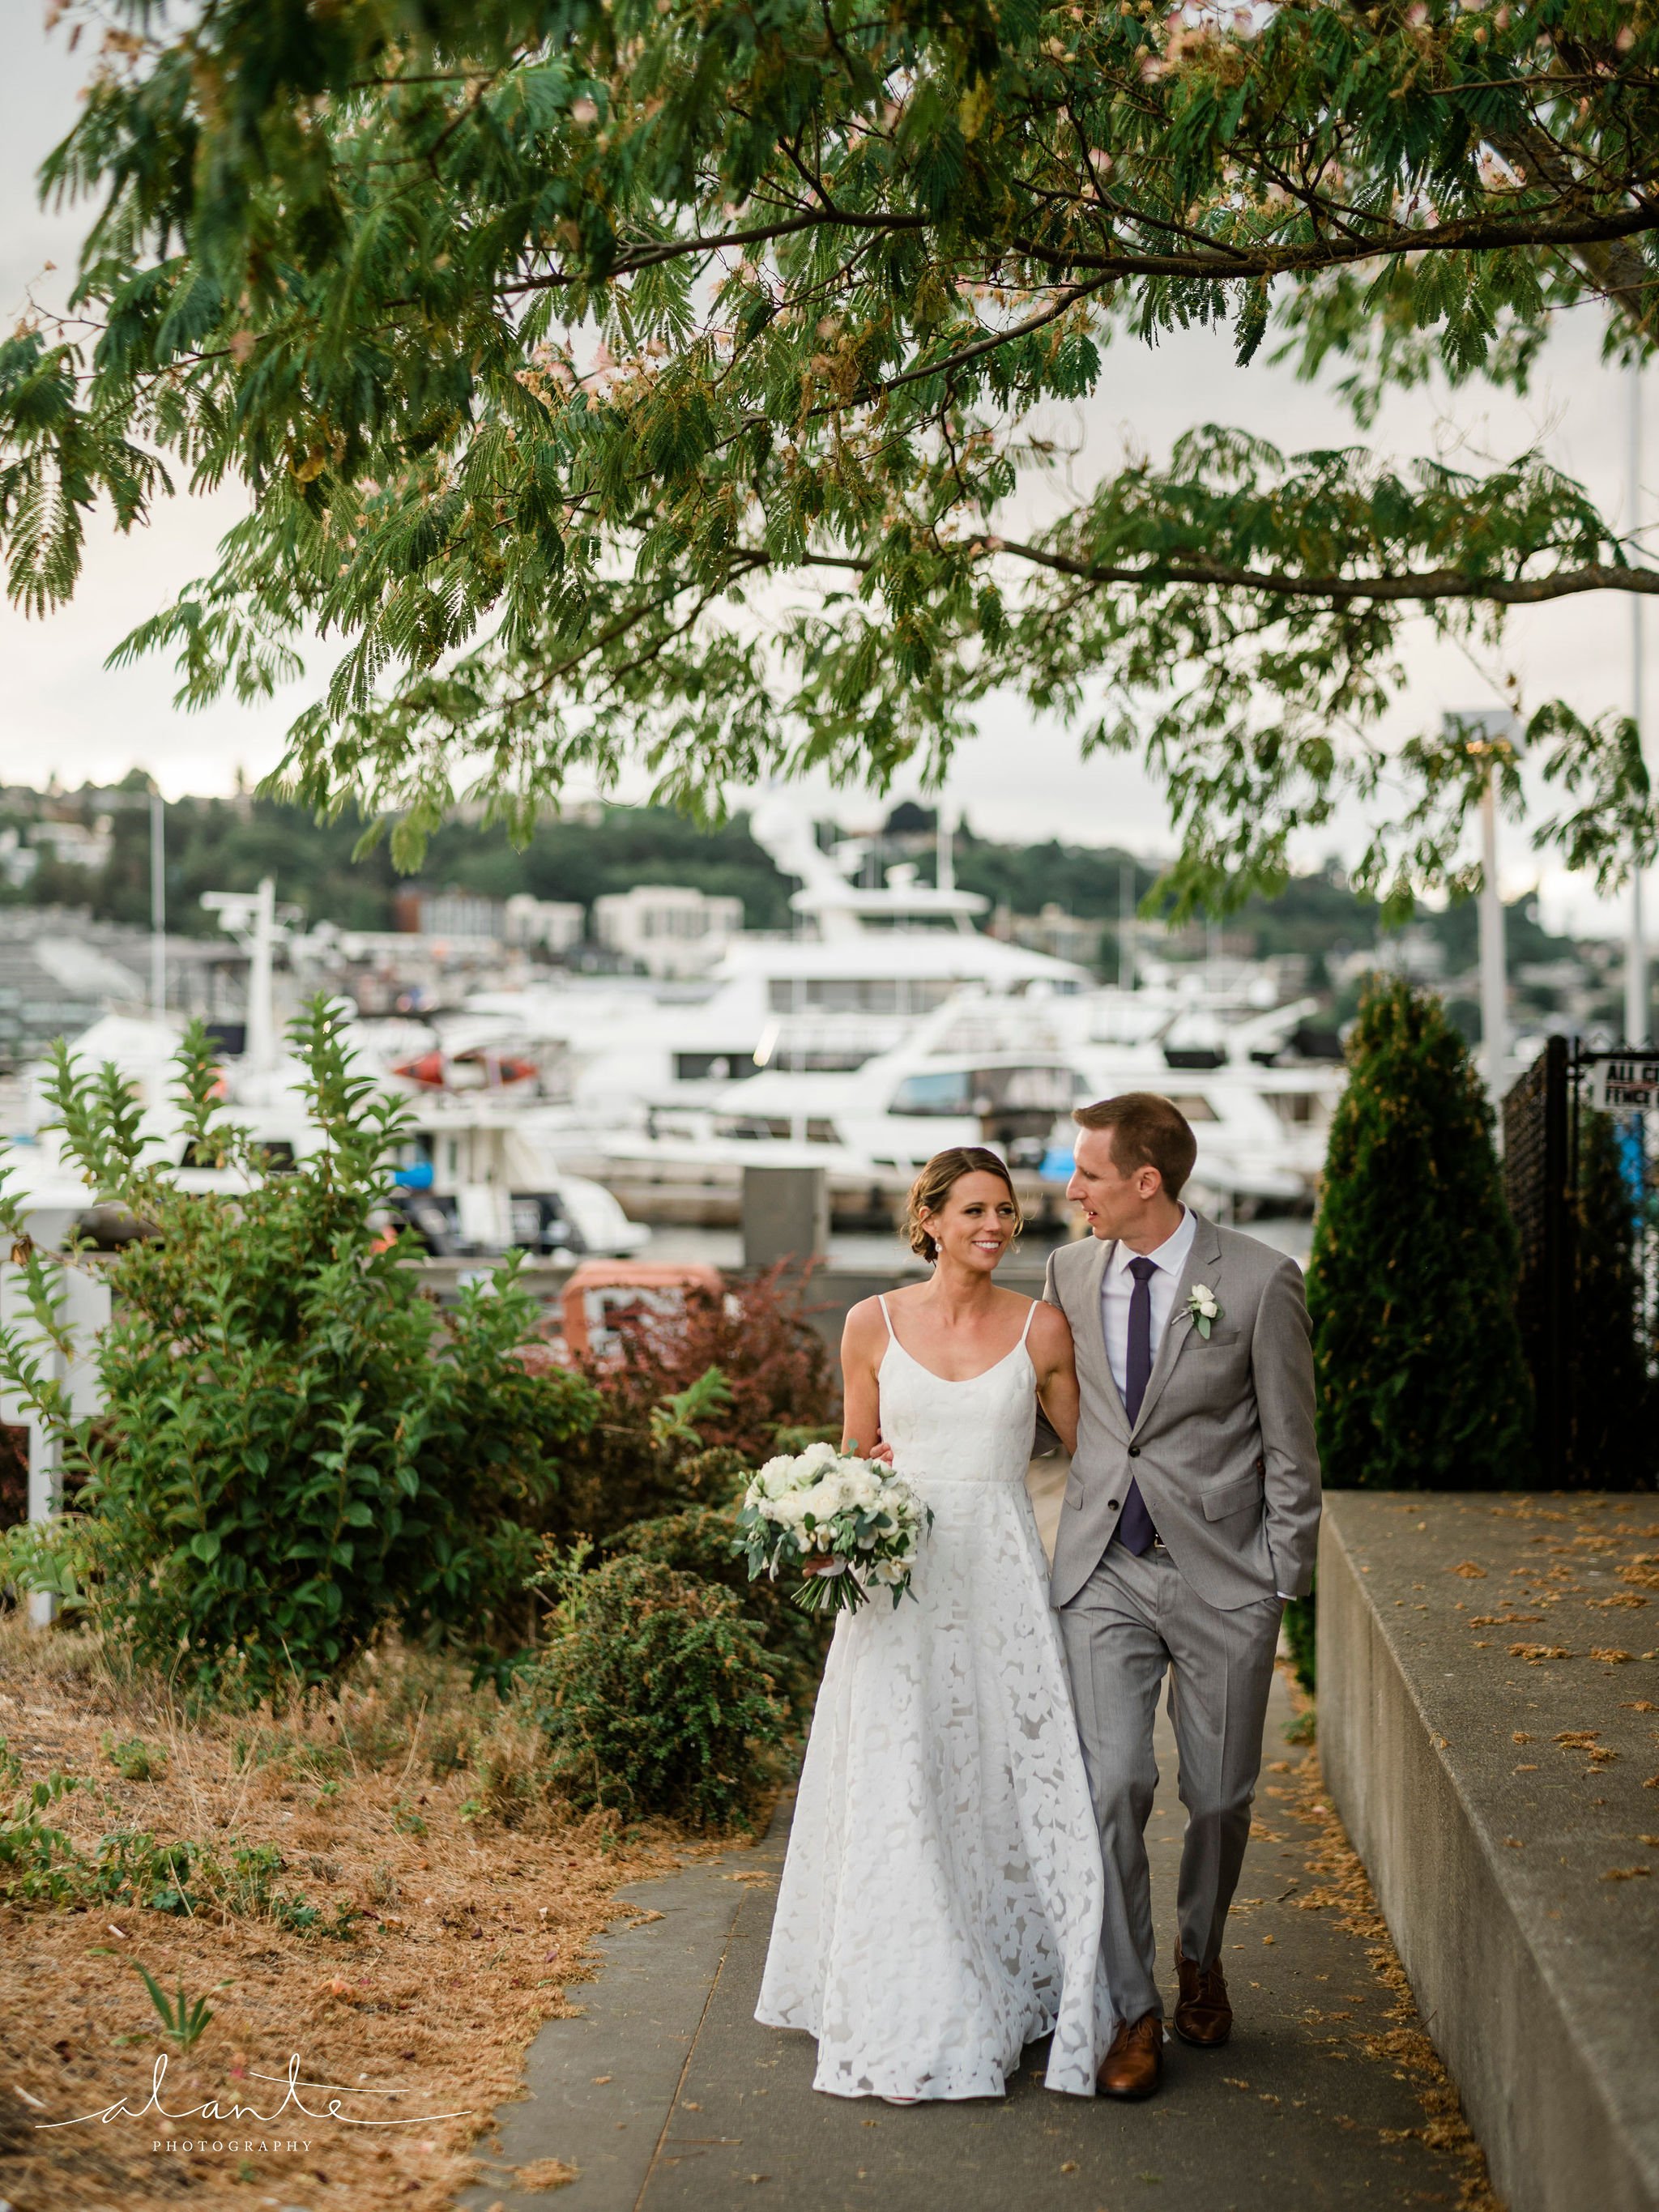 Alante-Photography-Seattle-Washington-Wedding-Dockside-Dukes-Lake-Union-158.jpg